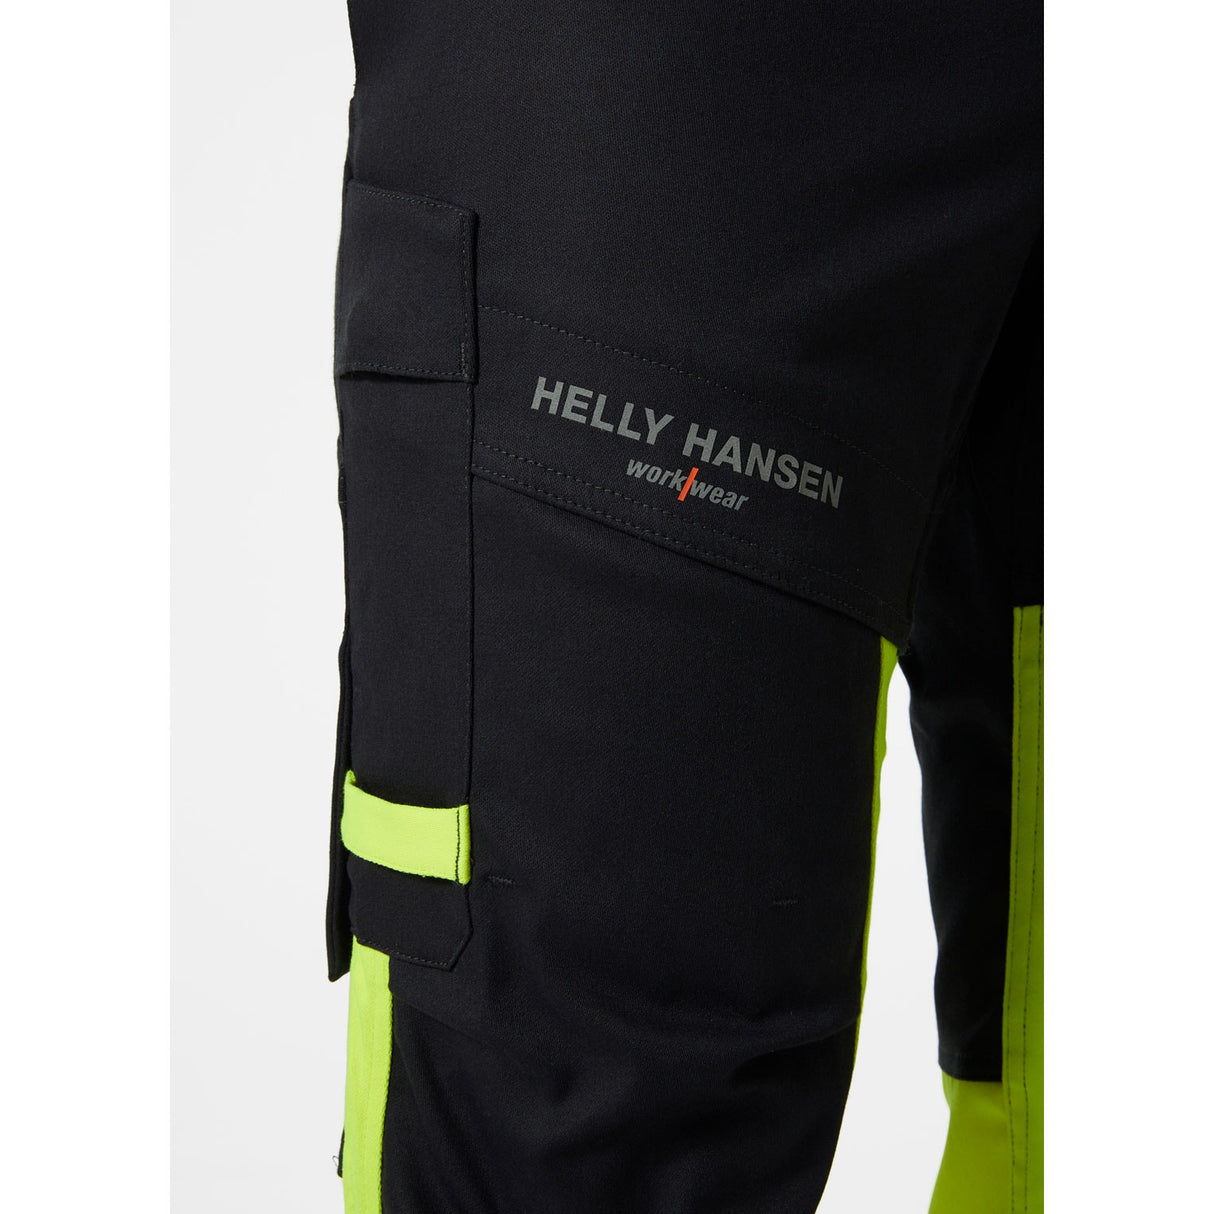 Helly Hansen Workwear Fyre Work Pant Class 1